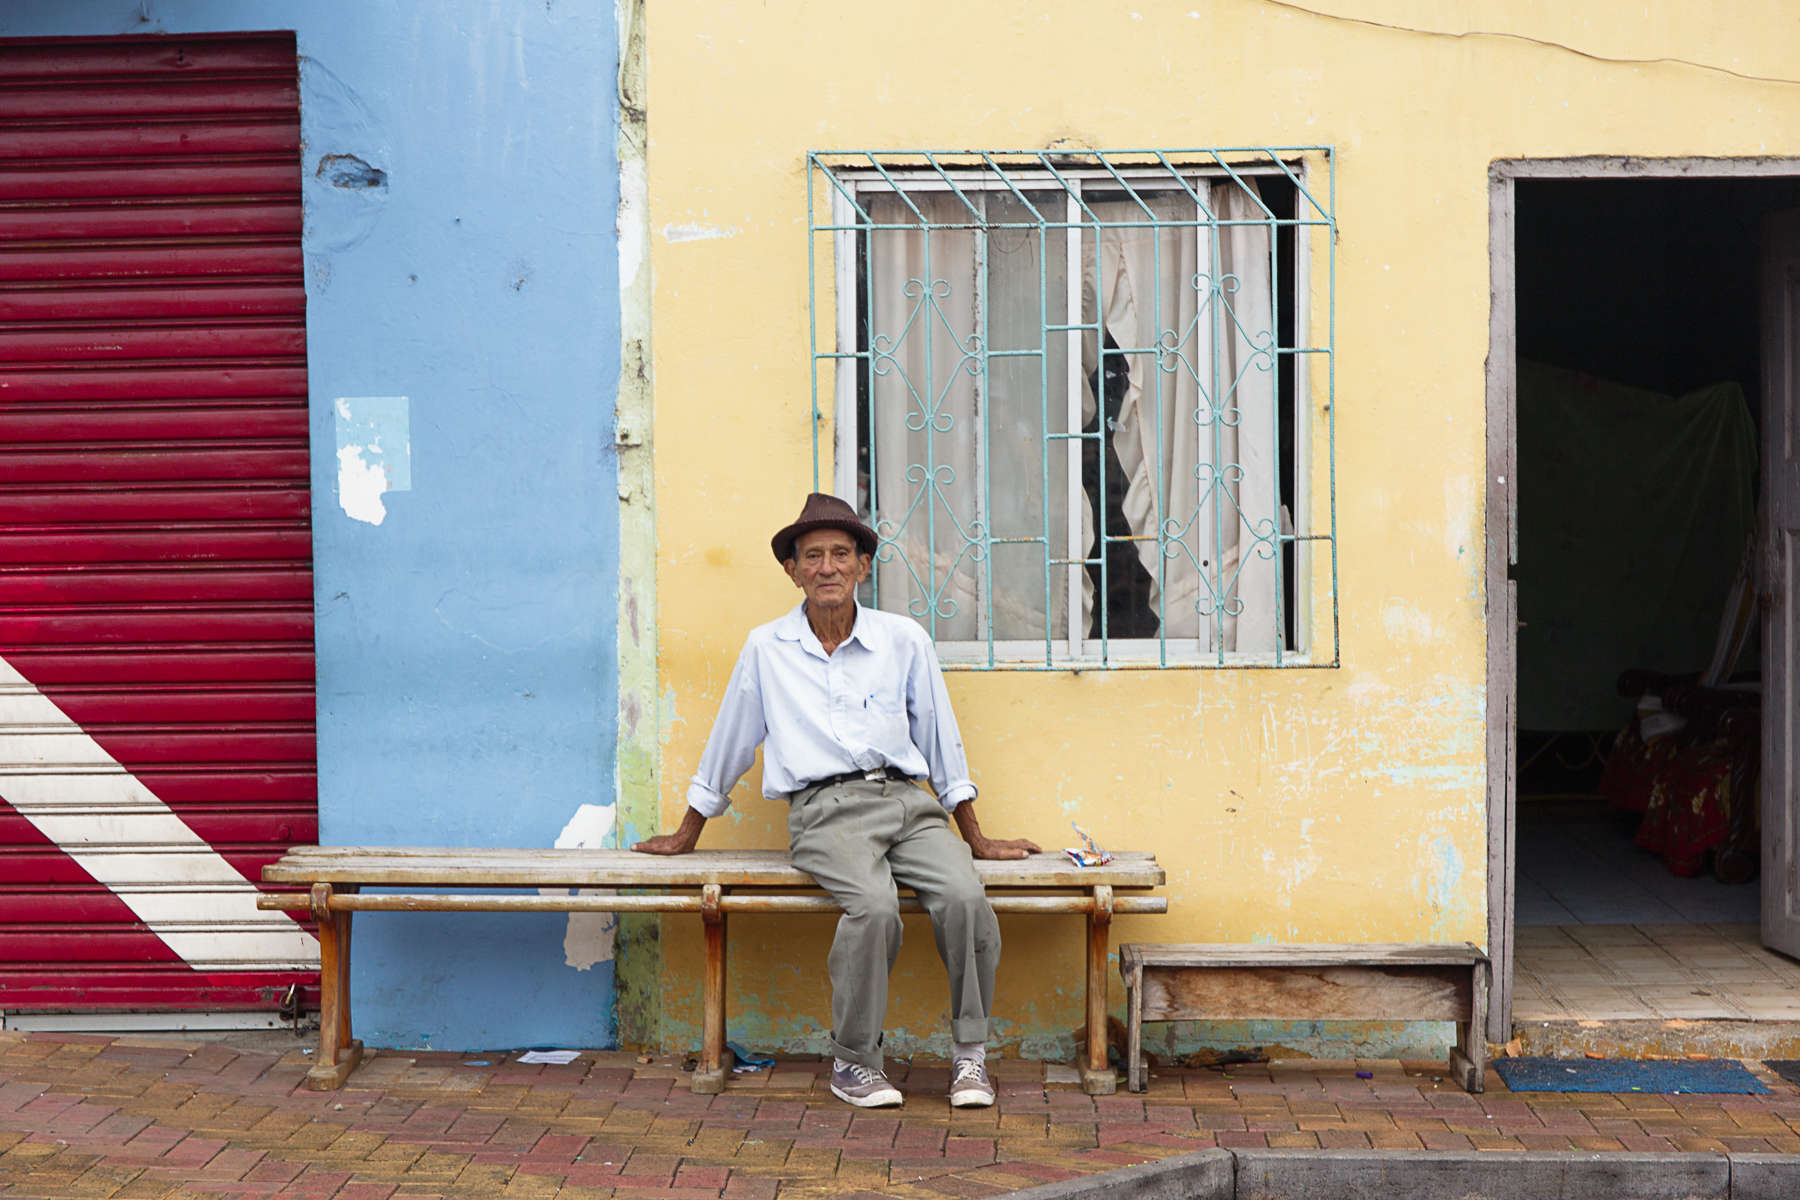 Portrait of Shopkeeper, Santa Cruz, Galapagos